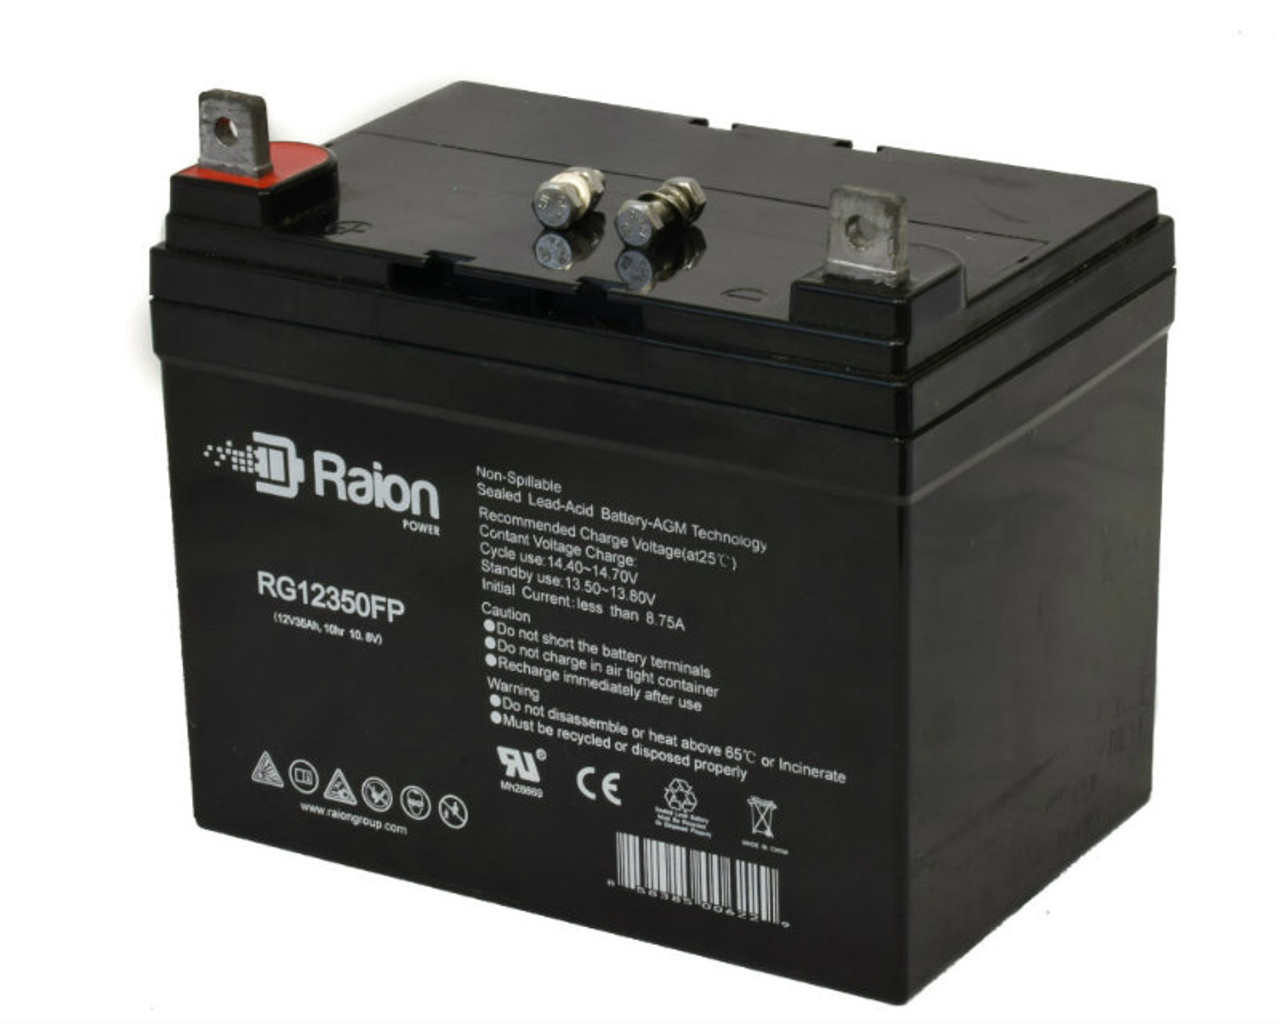 Raion Power Replacement 12V 35Ah RG12350FP Battery for Ingersol Equipment 5020V